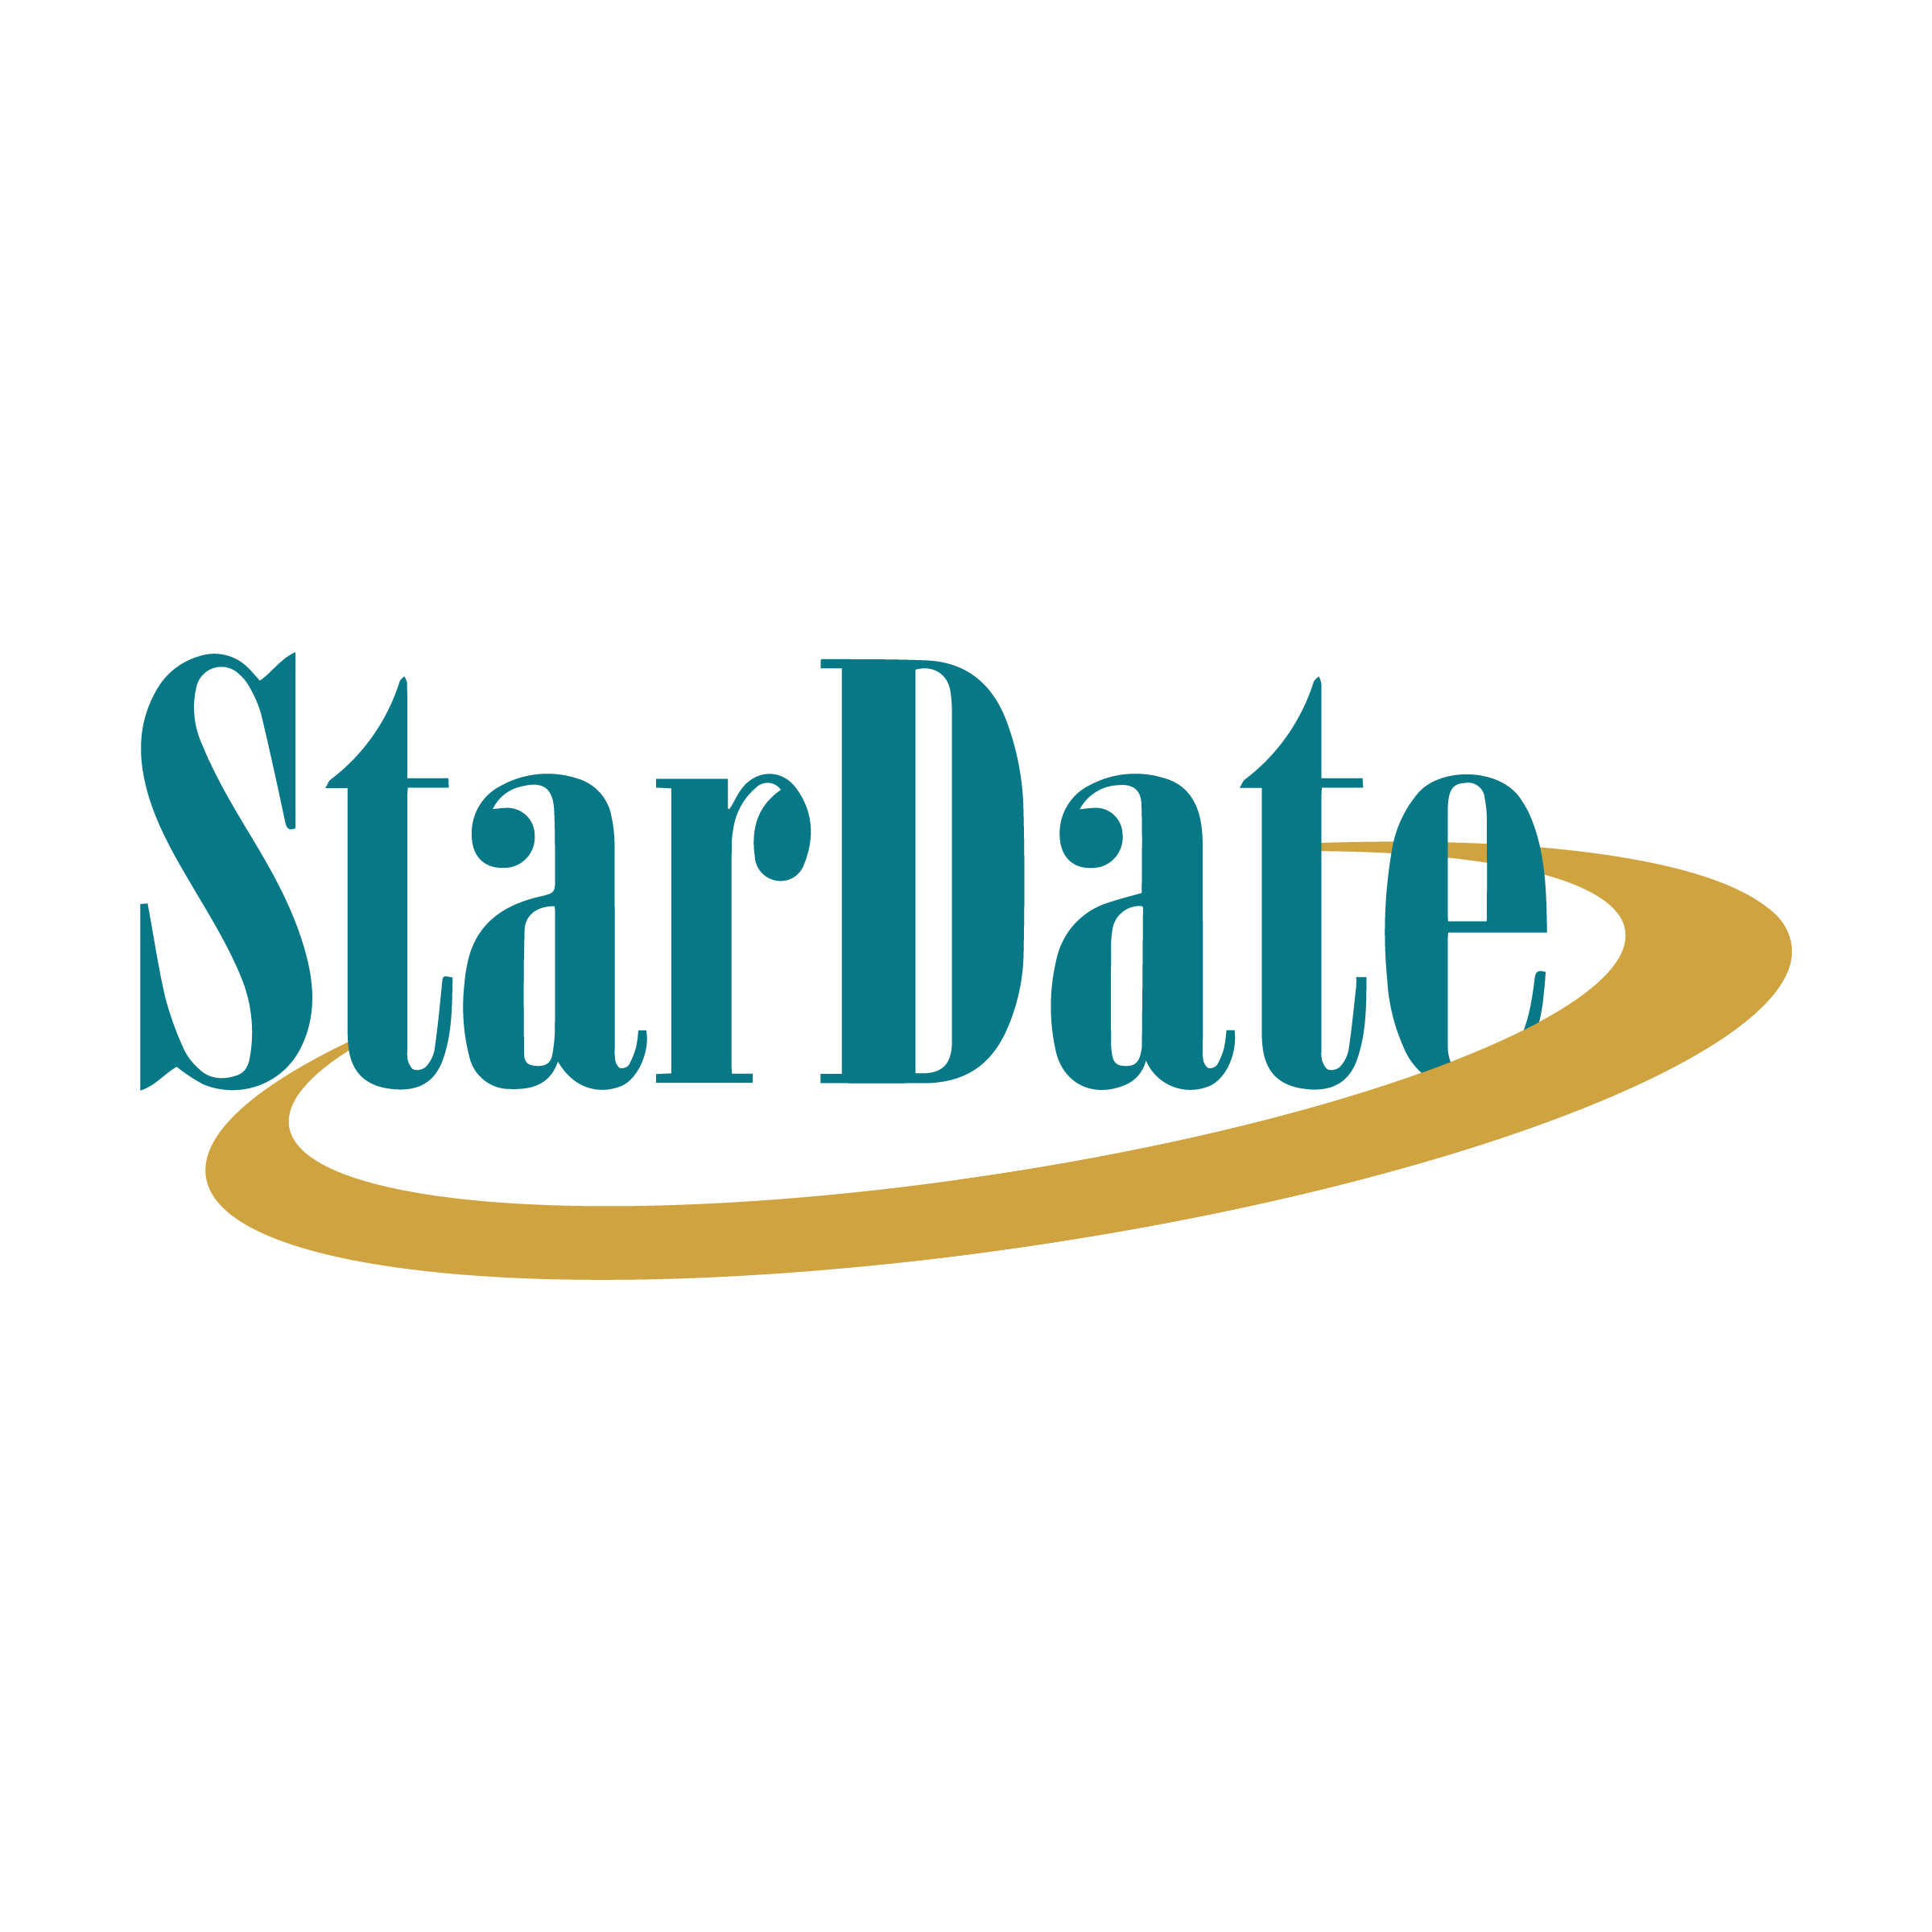 StarDate